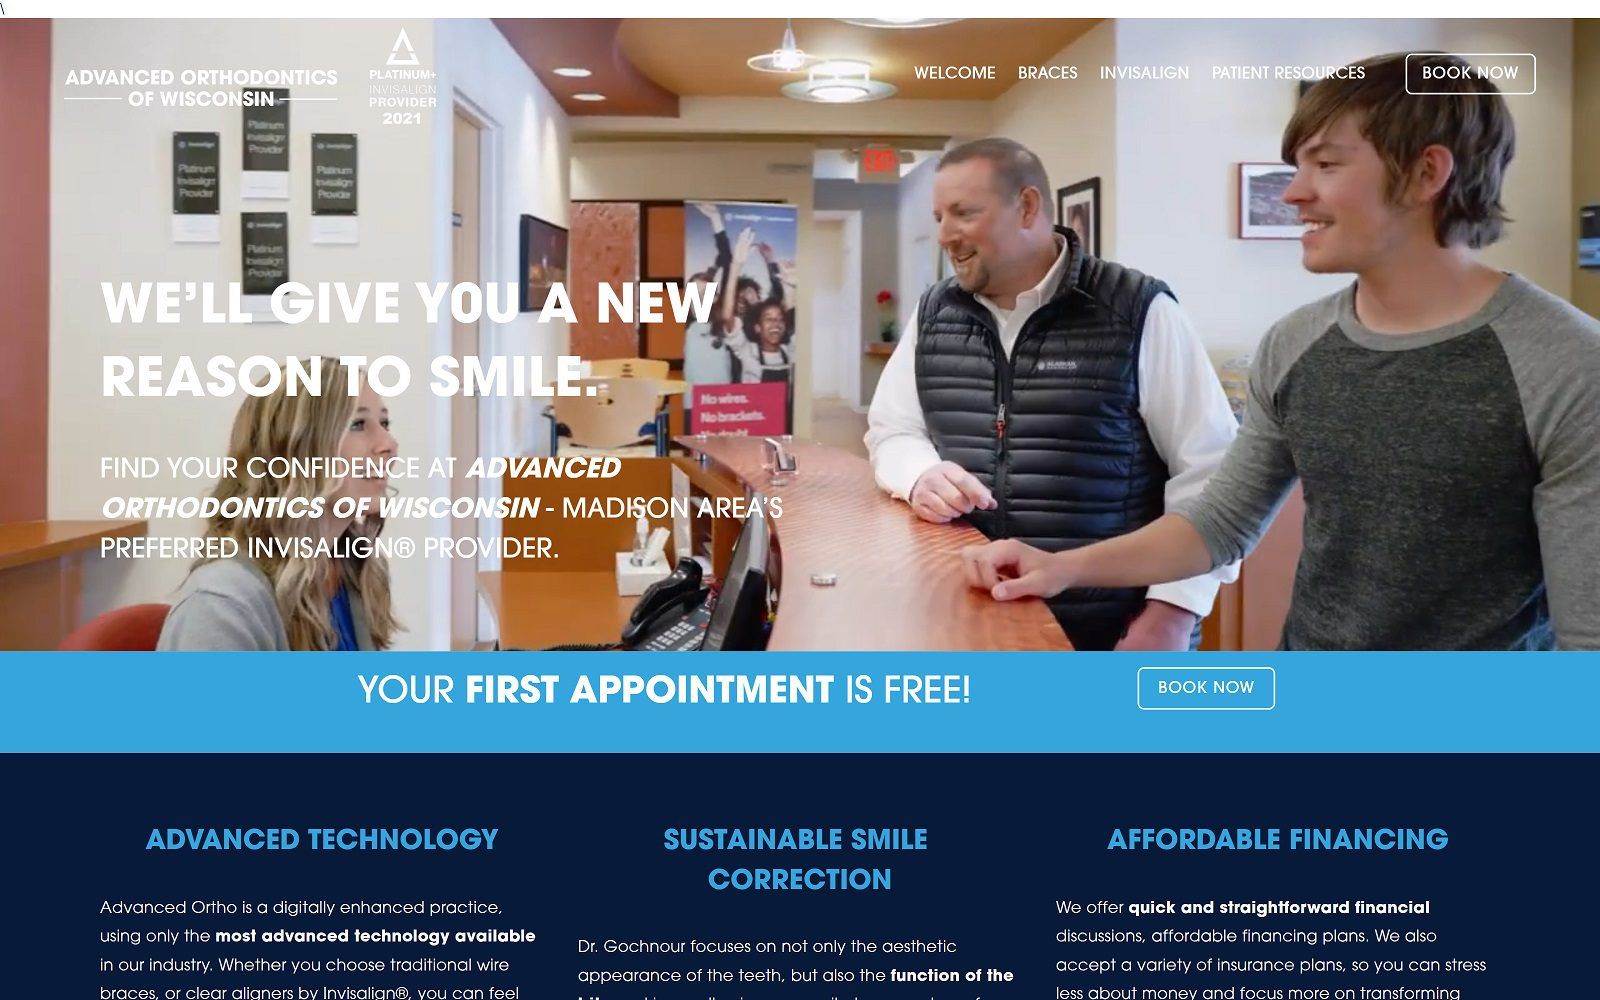 The screenshot of advanced orthodontics of wisconsin website